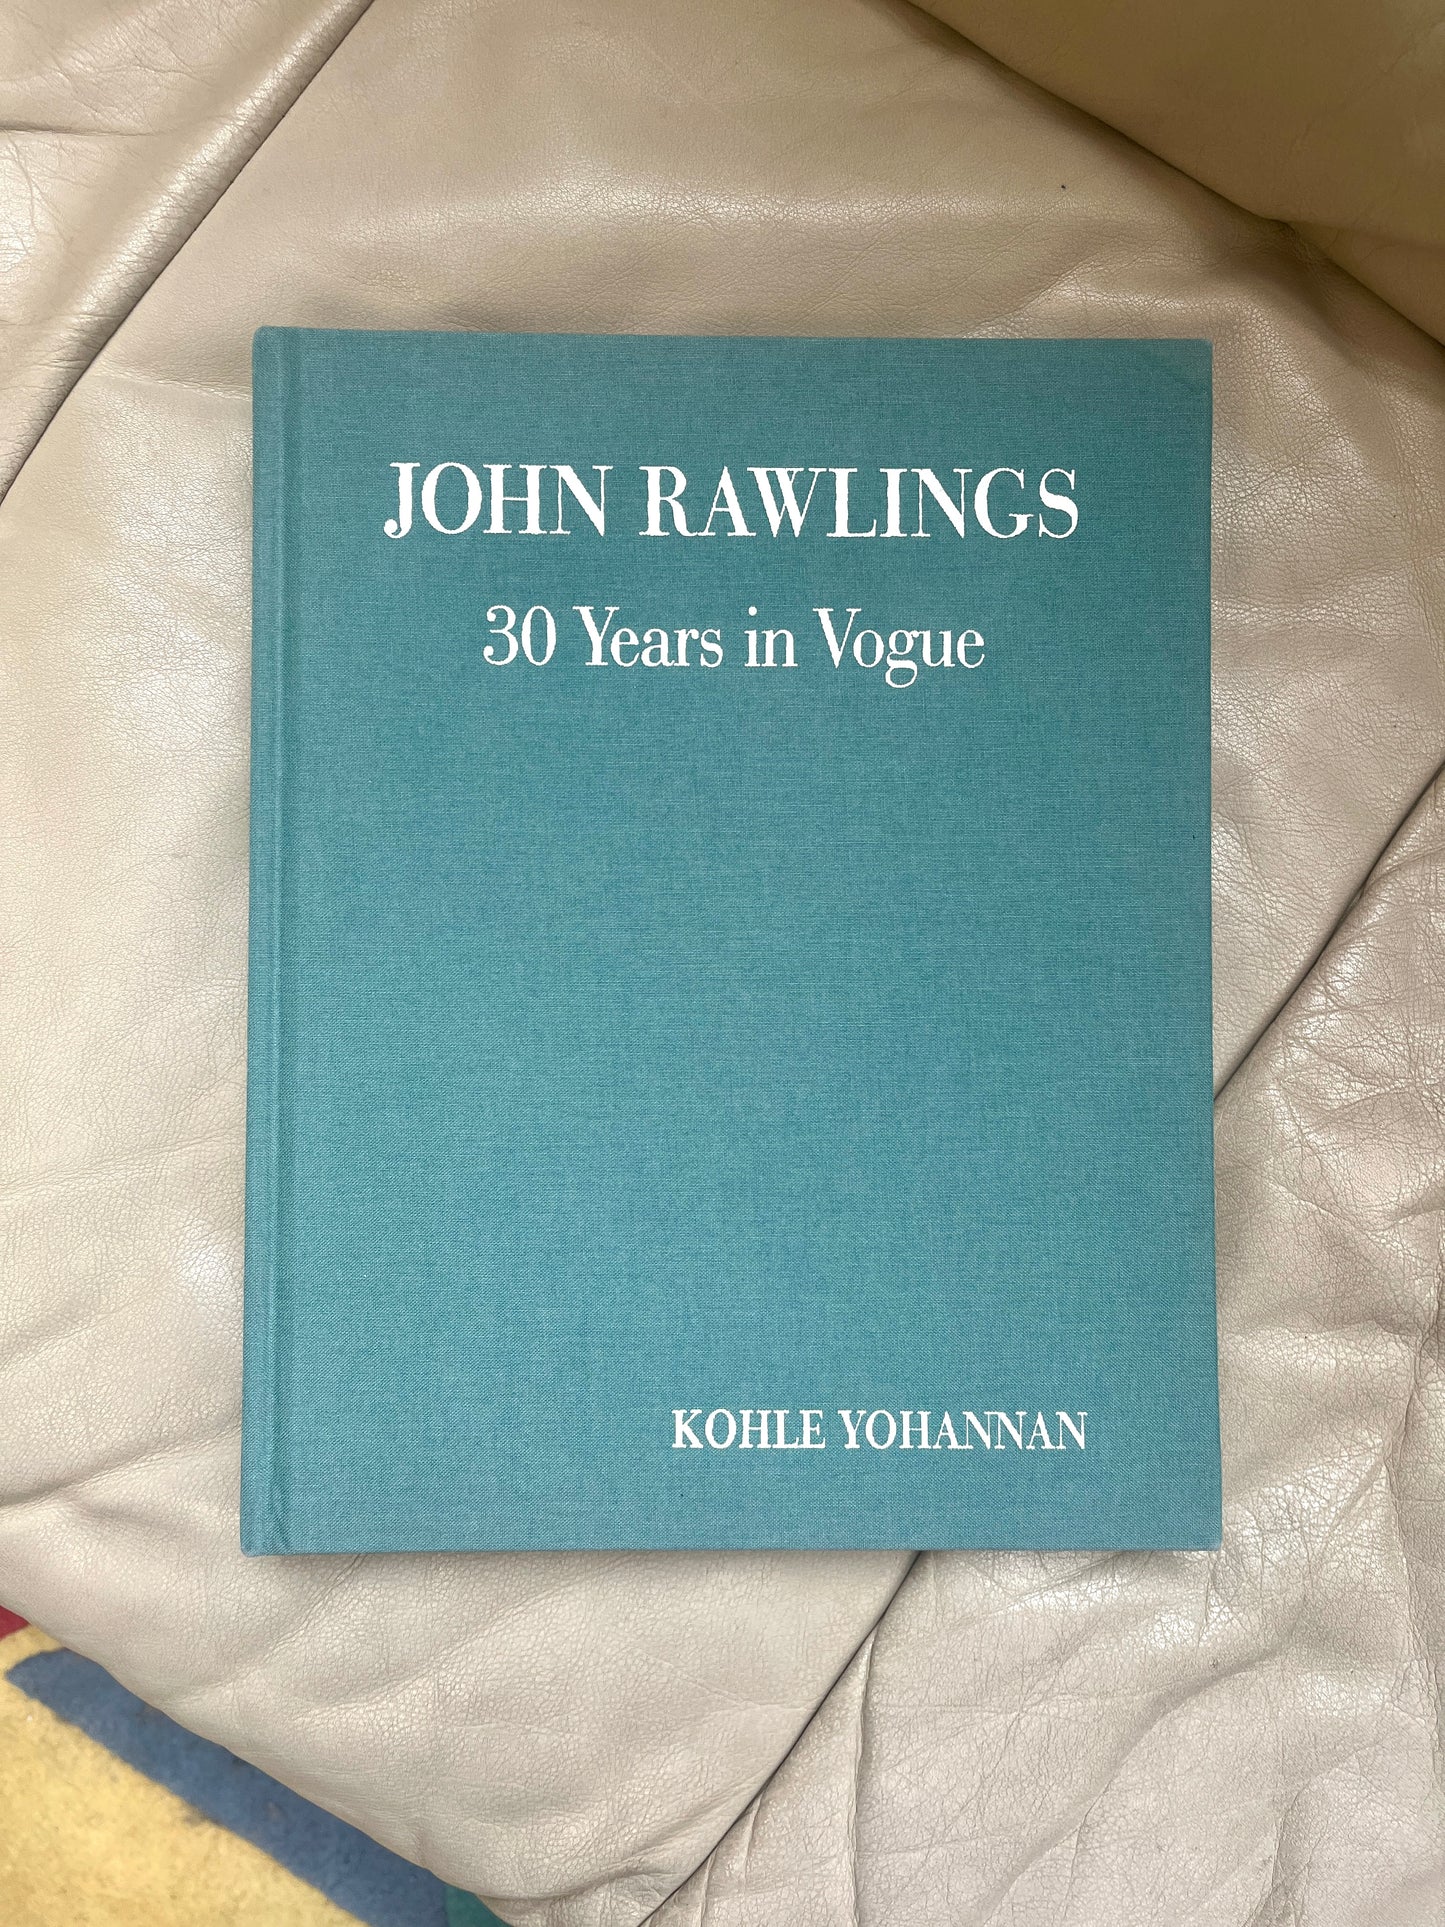 John Rawlings: 30 Years in Vogue Coffee Table Book